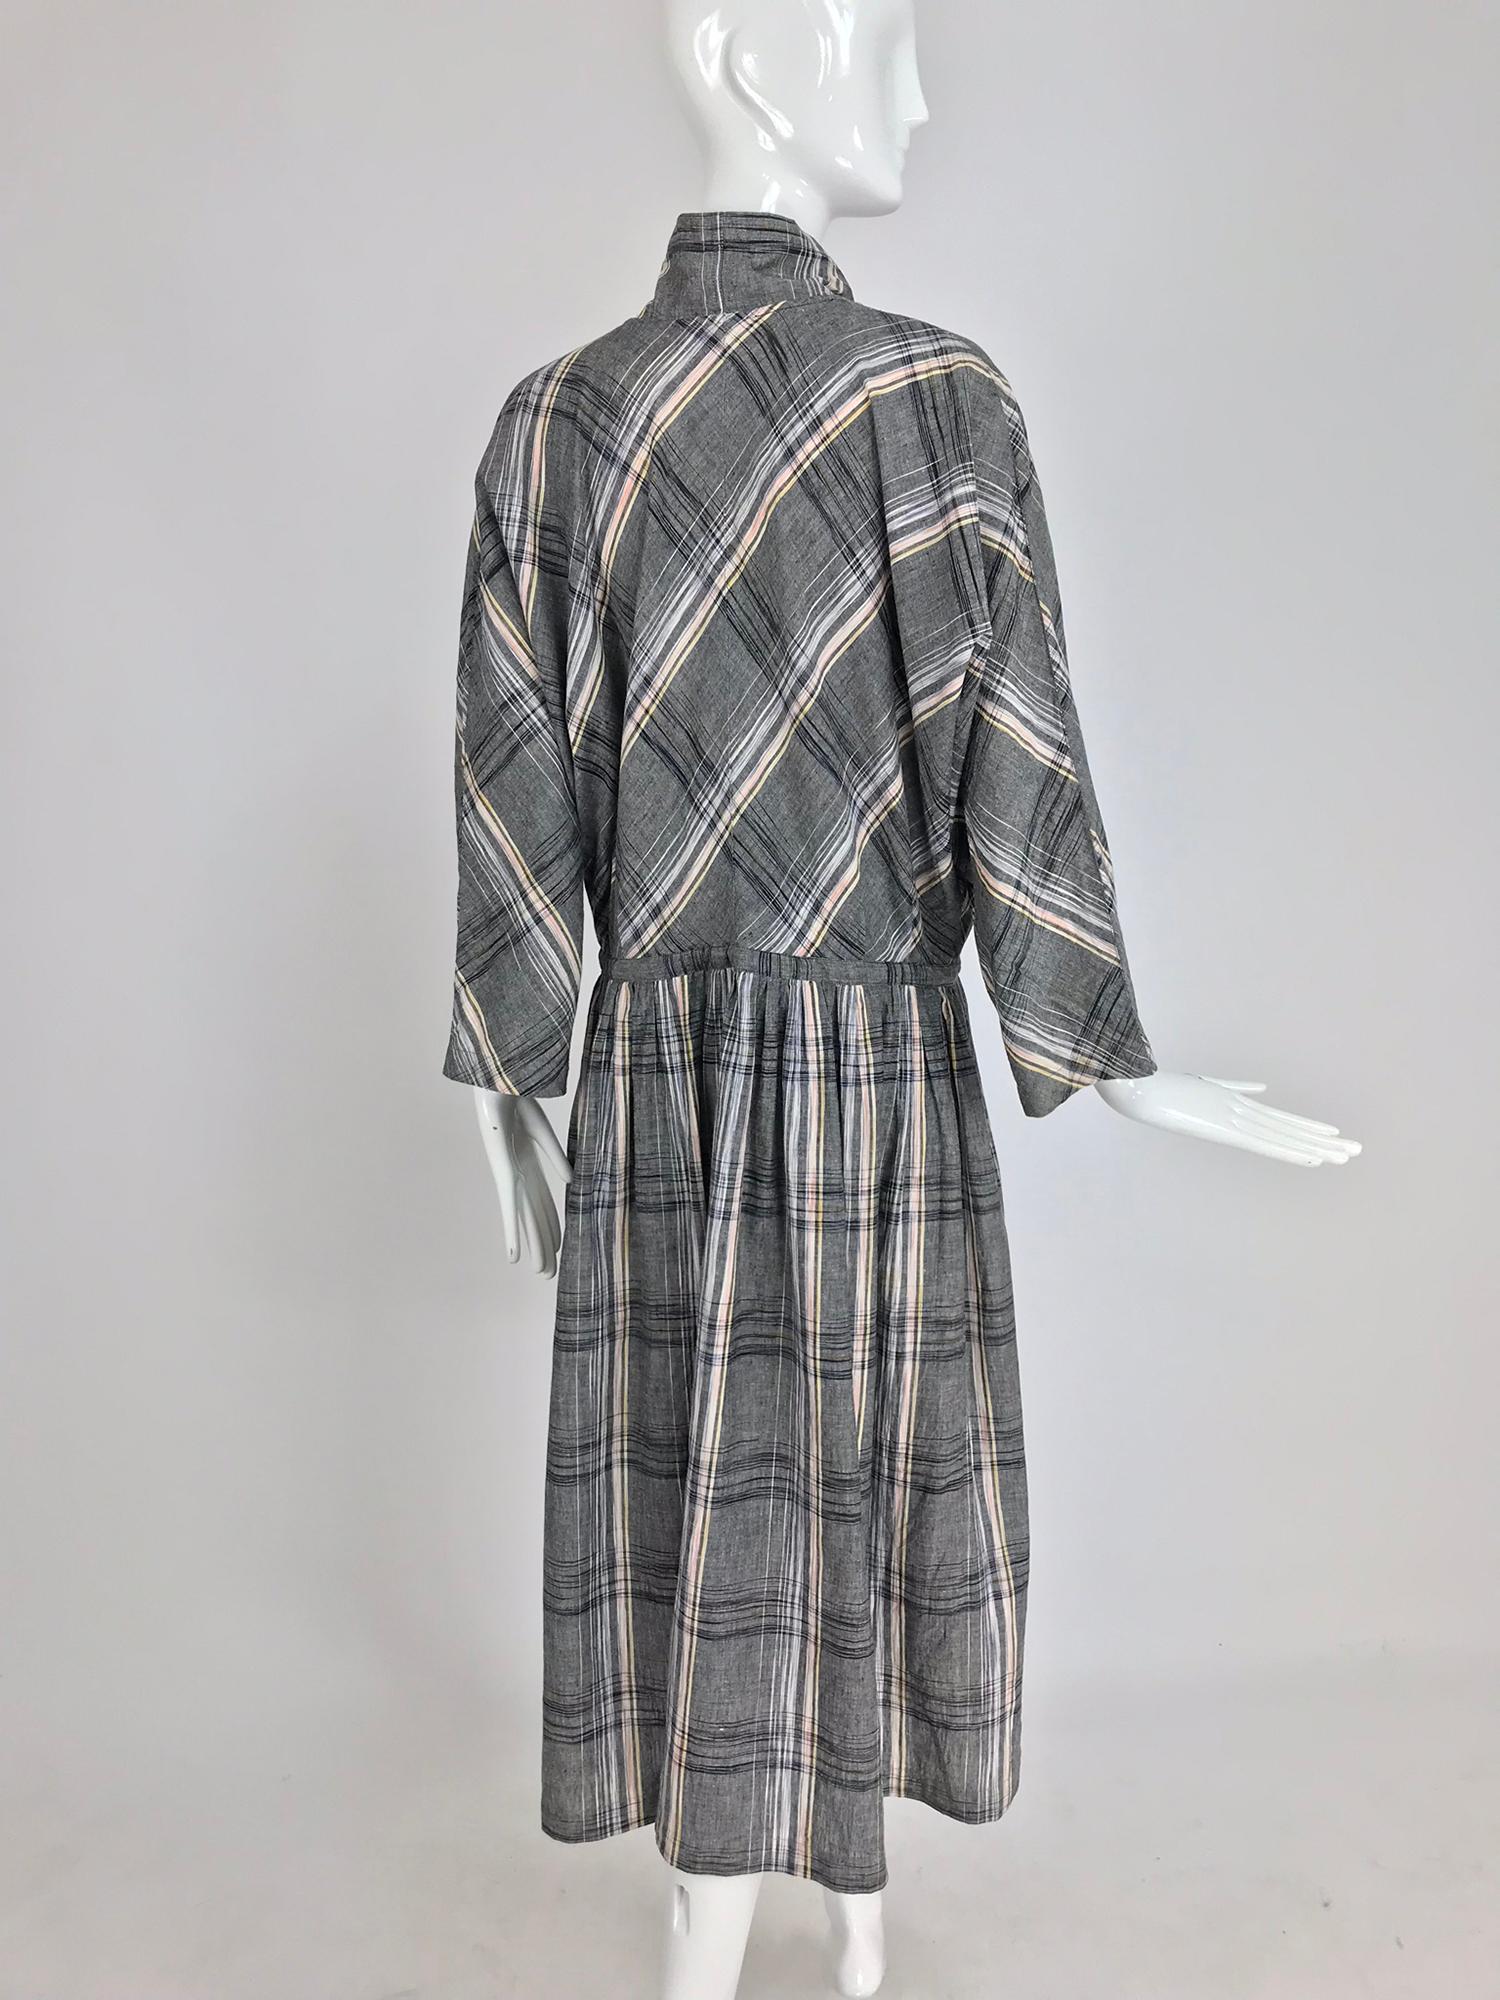 Women's Issey Miyake Funnel Neck Plaid Cotton Draw Cord Waist Dress 1980s